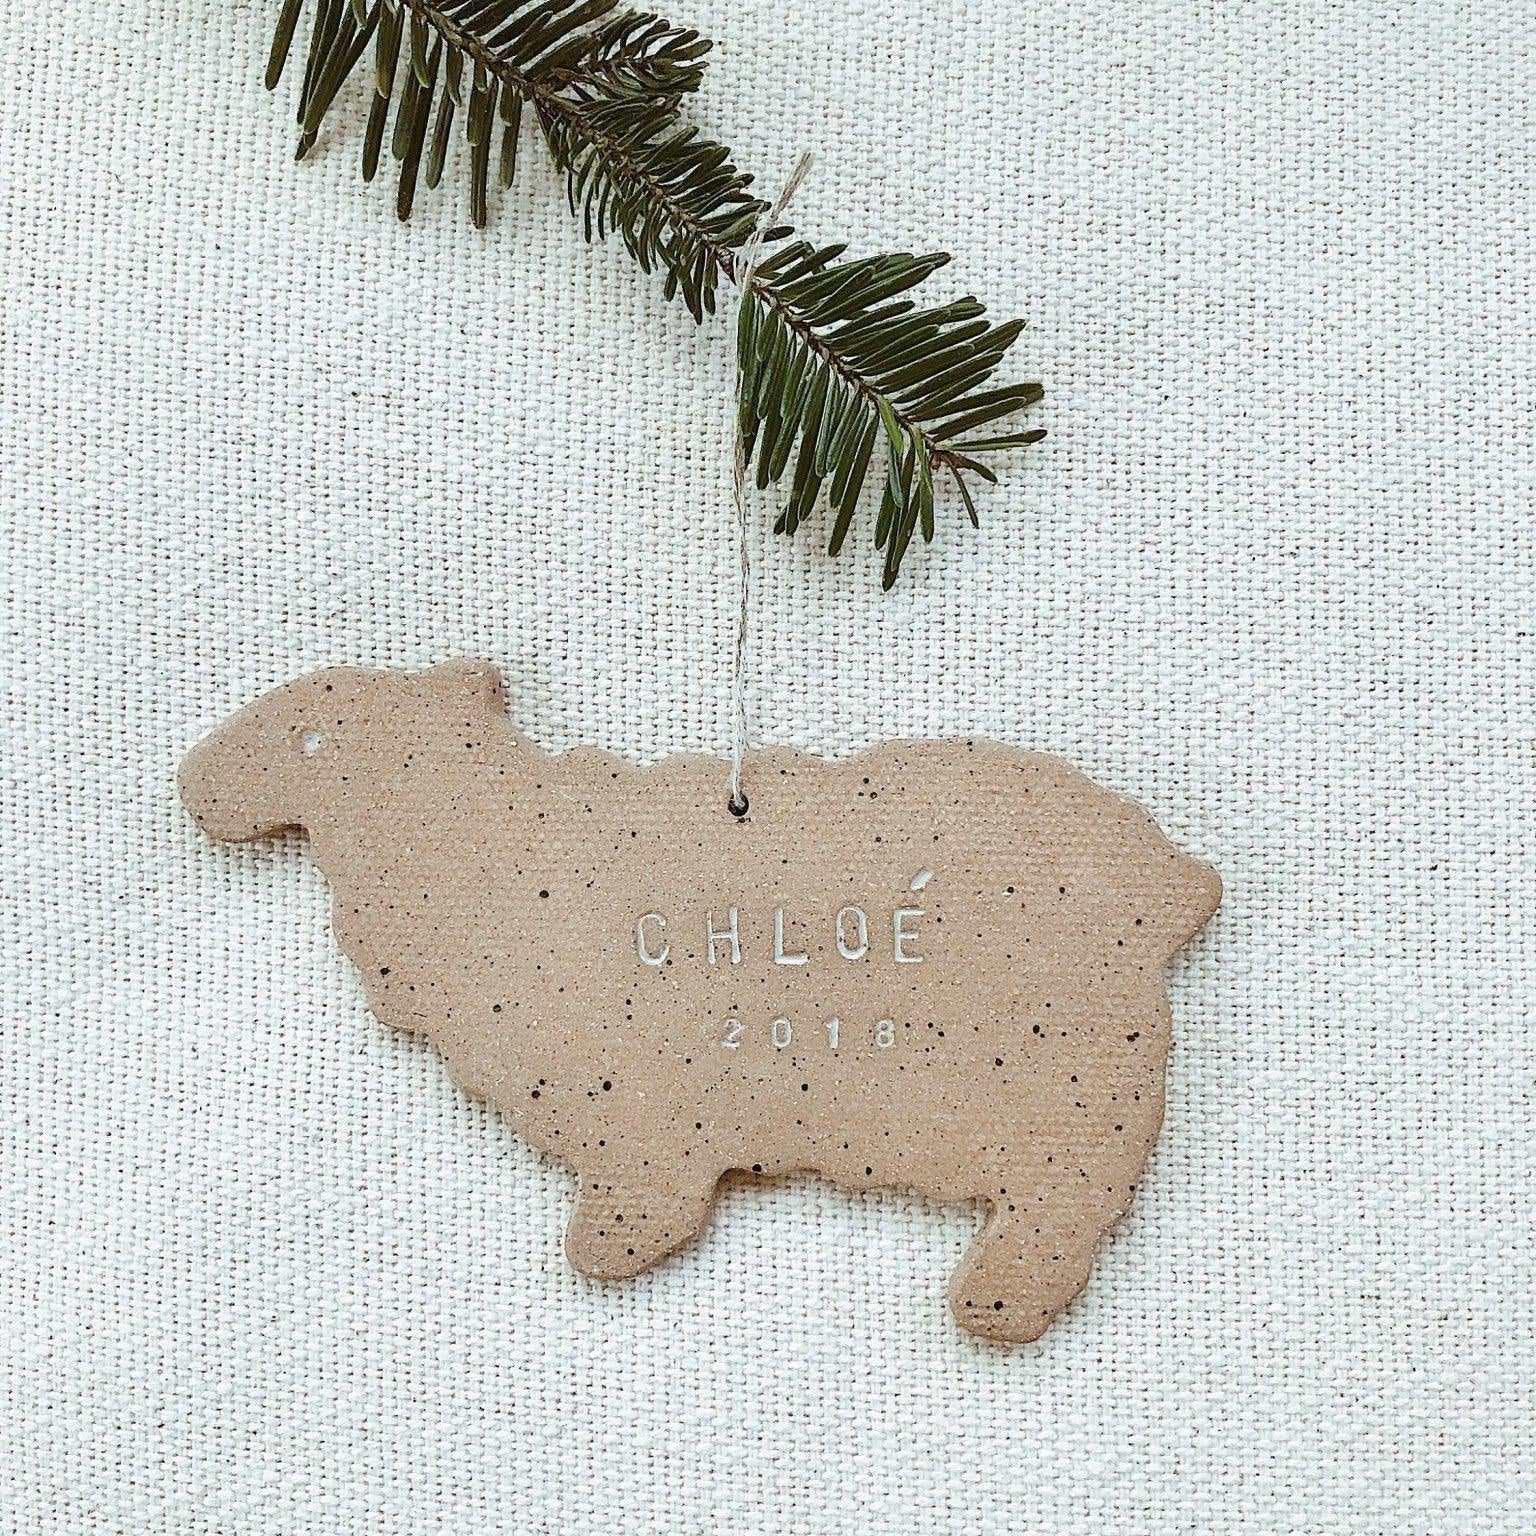 Personalized Sheep Child Ornament MuddyHeart